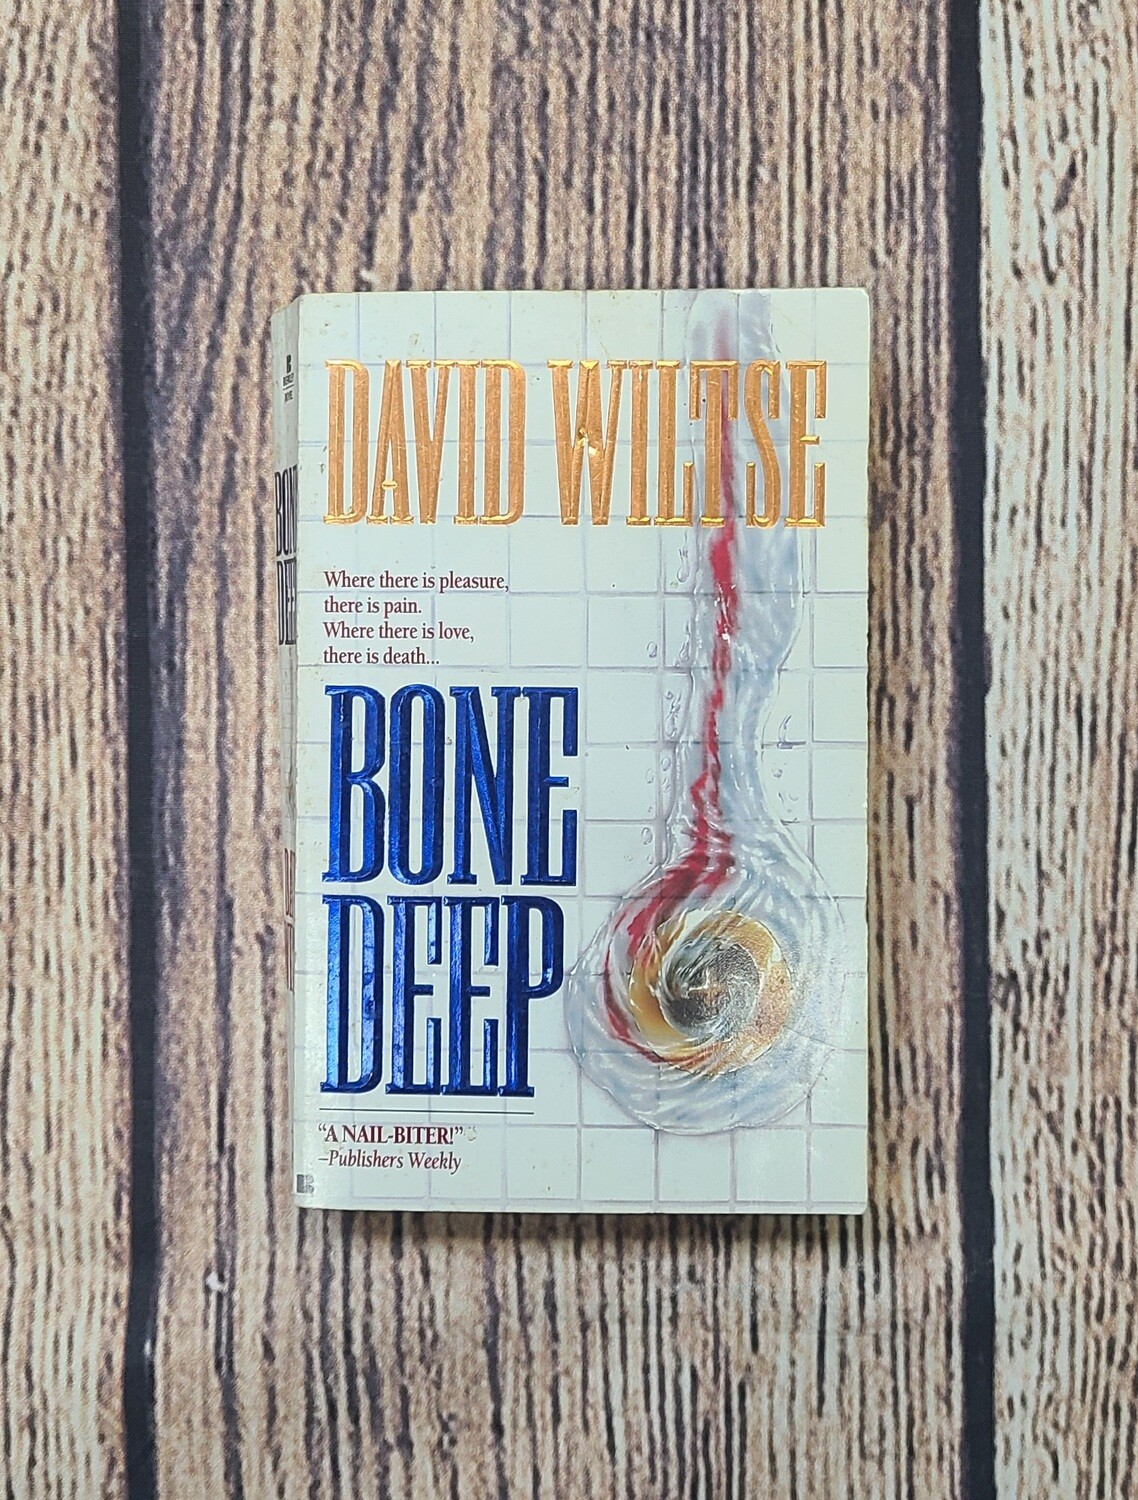 Bone Deep by David Wiltse